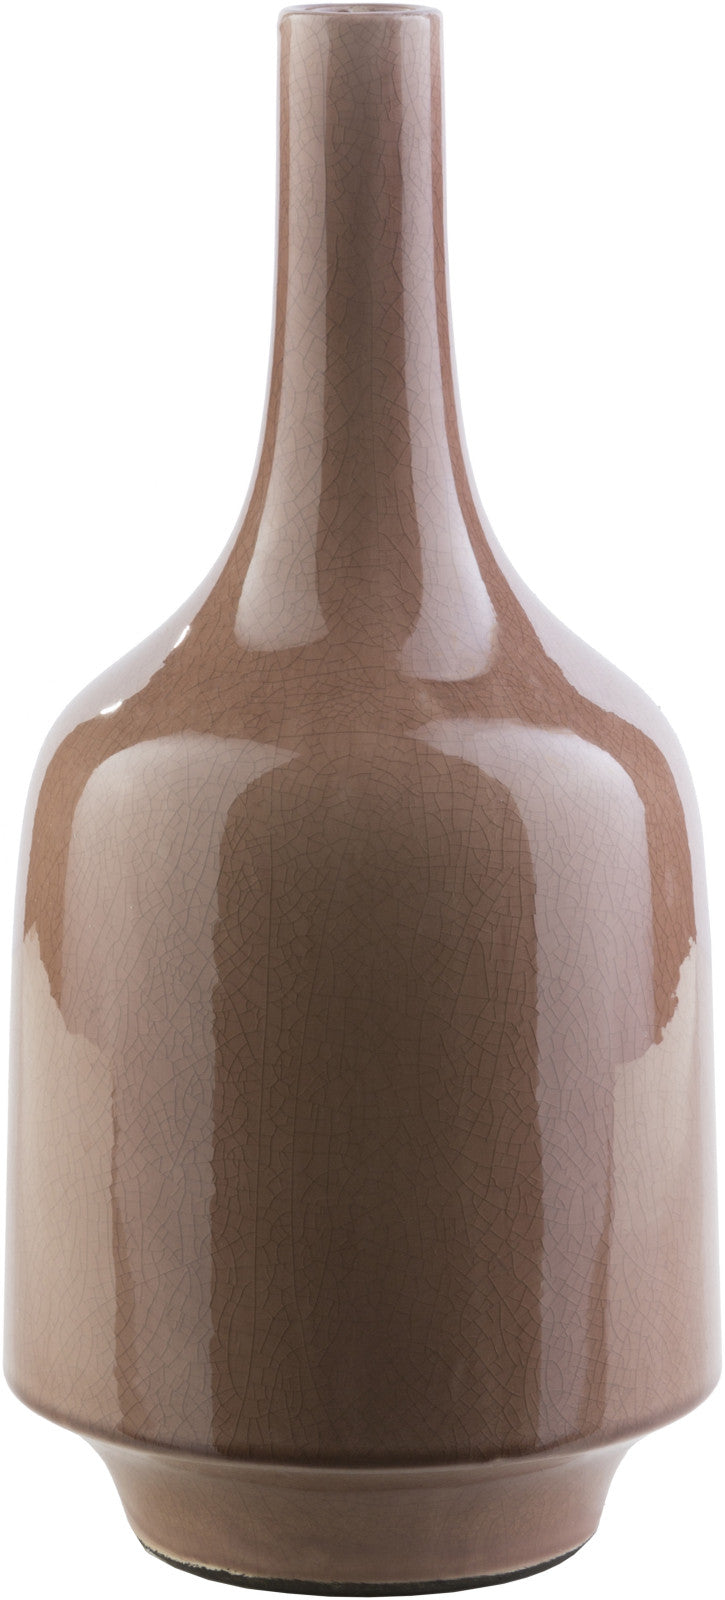 Surya Olsen OLS-101 Vase main image